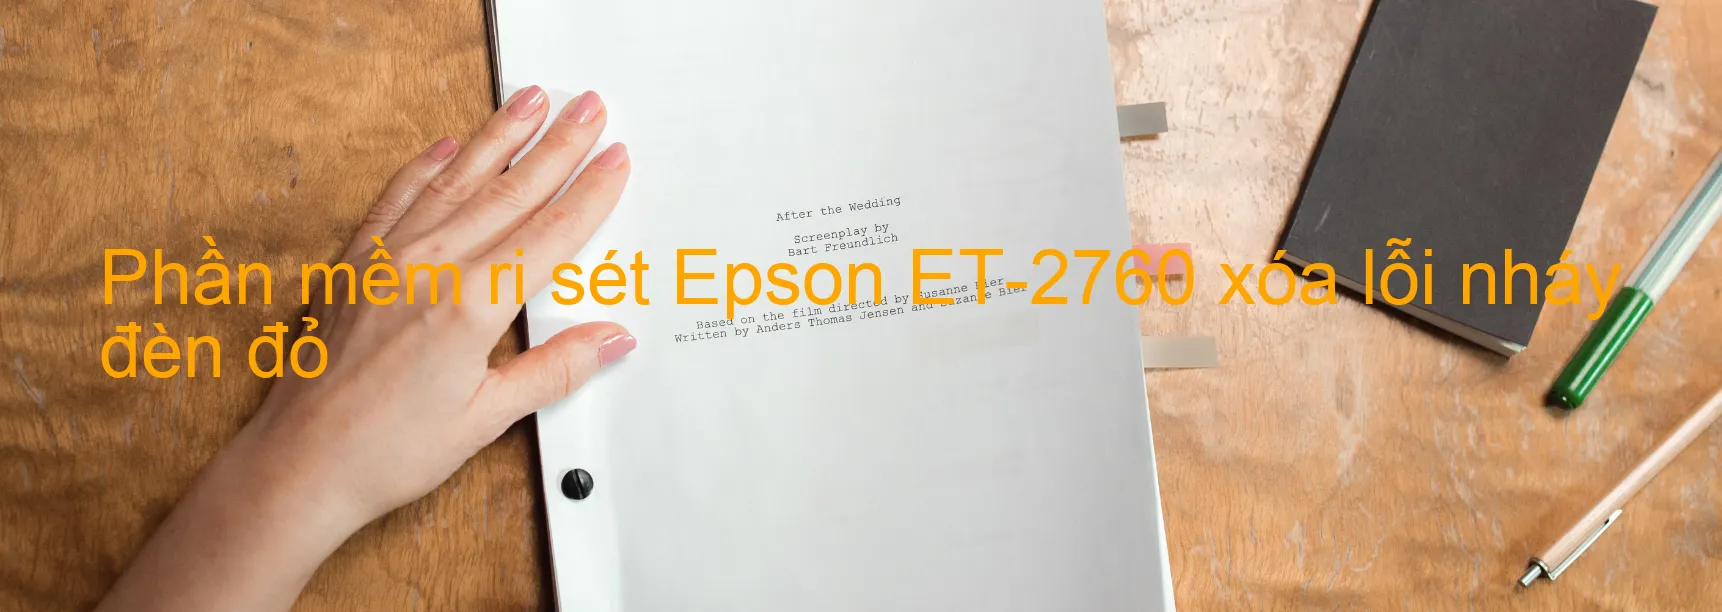 Phần mềm reset Epson ET-2760 xóa lỗi nháy đèn đỏ